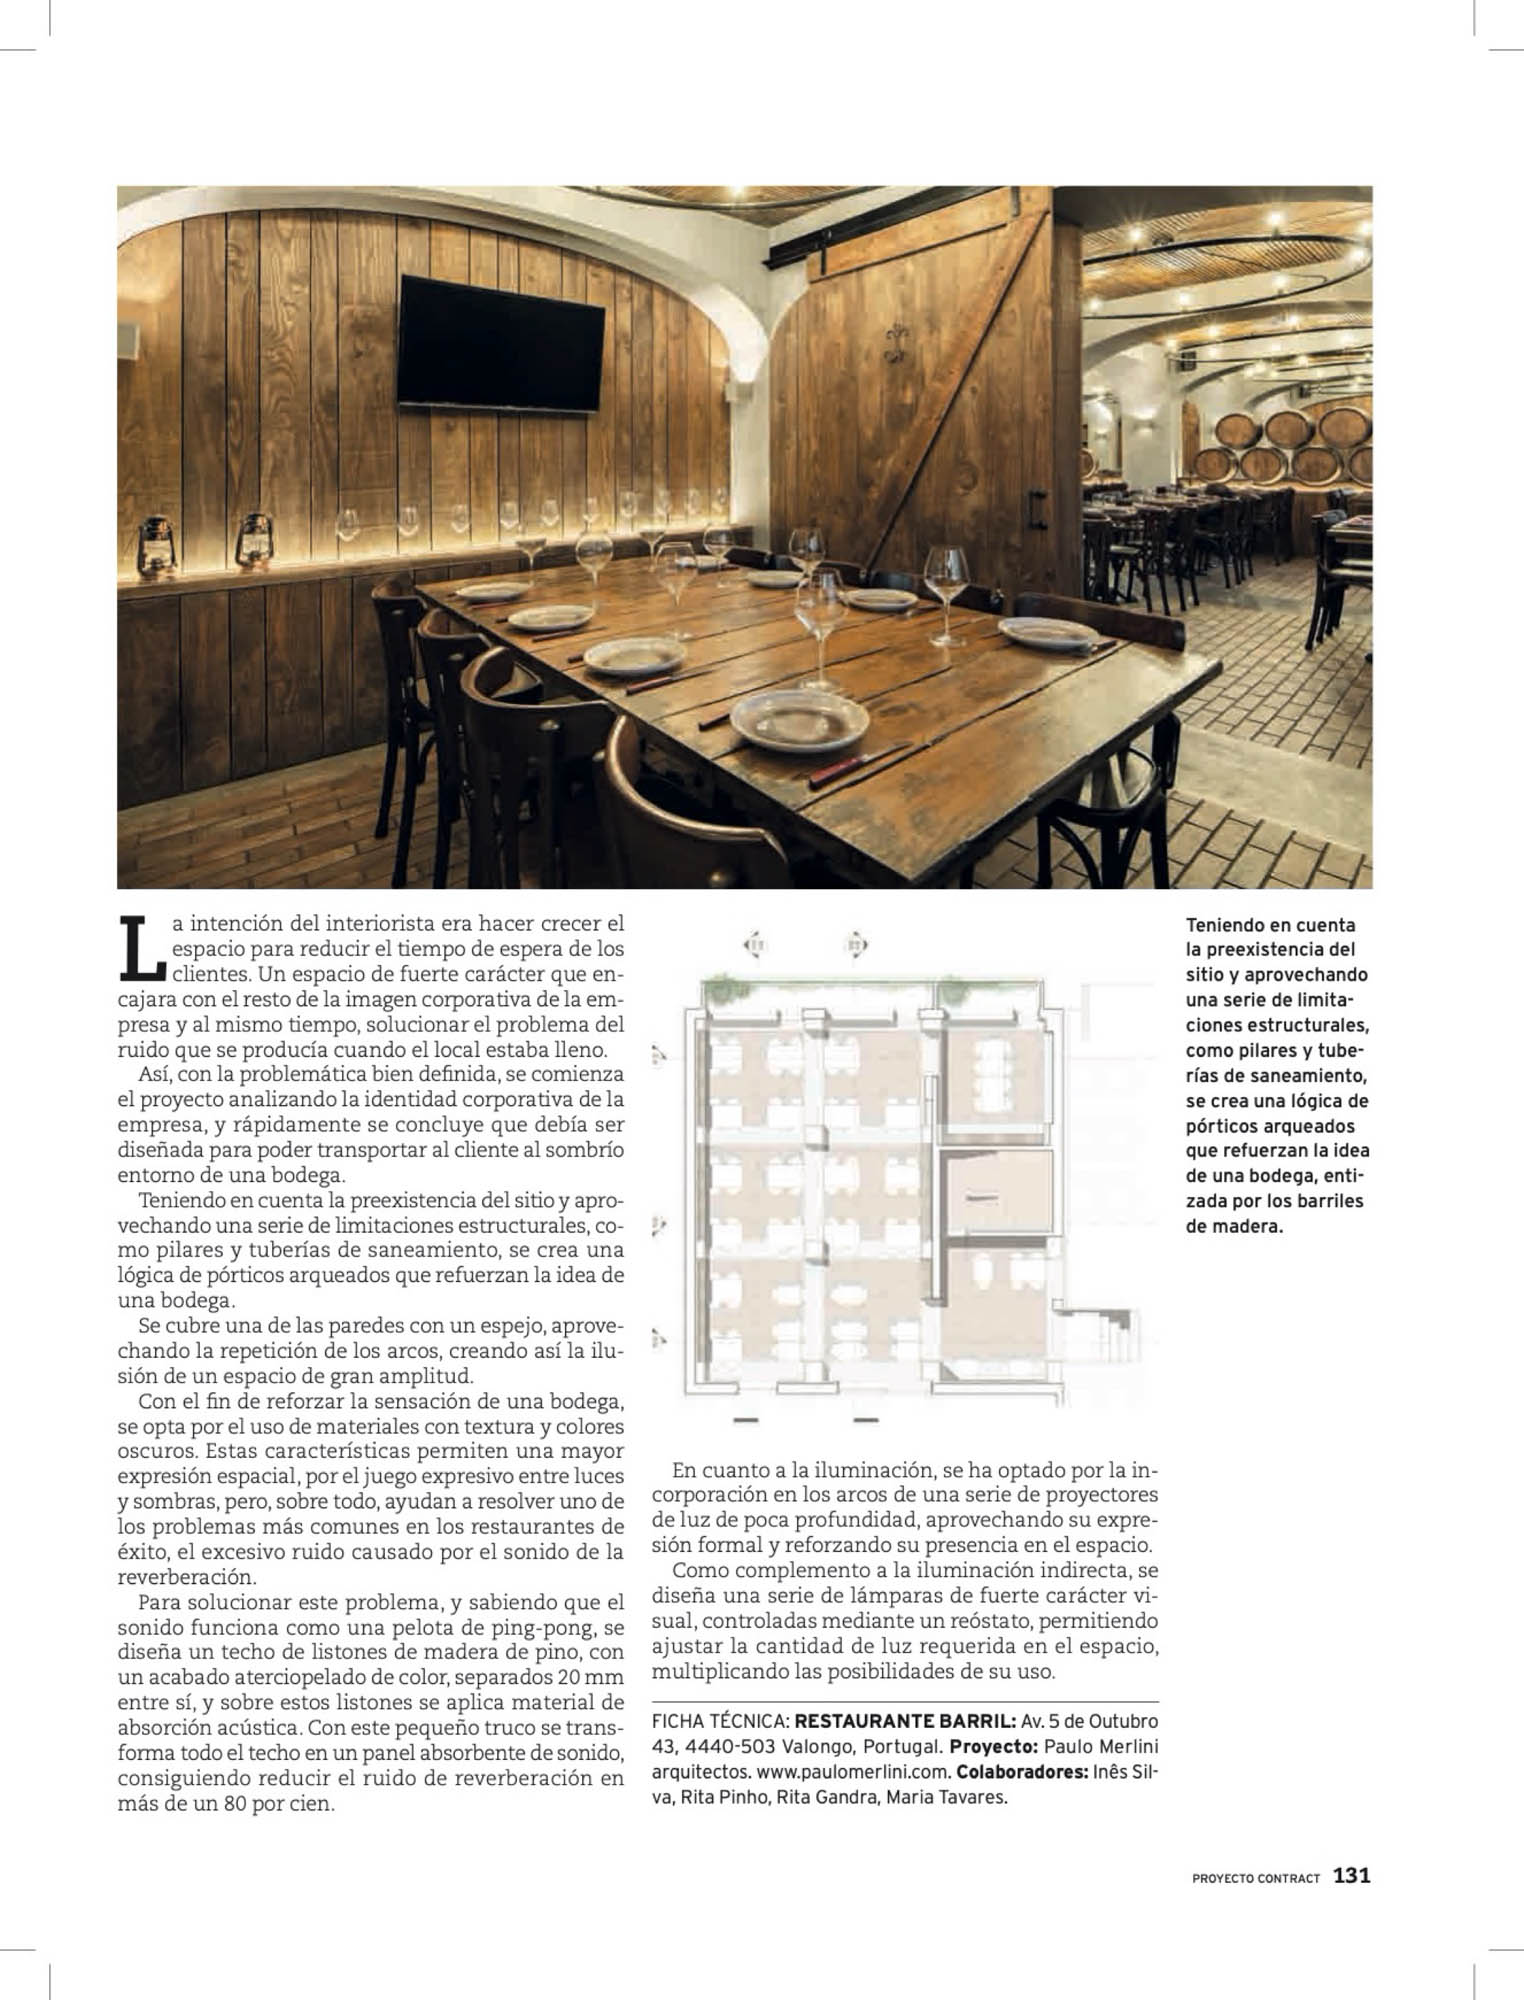 Restaurante Barril do Paulo Merlini Arquitecto na revista Proyecto Contract com fotografia de arquitectura Ivo Tavares Studio